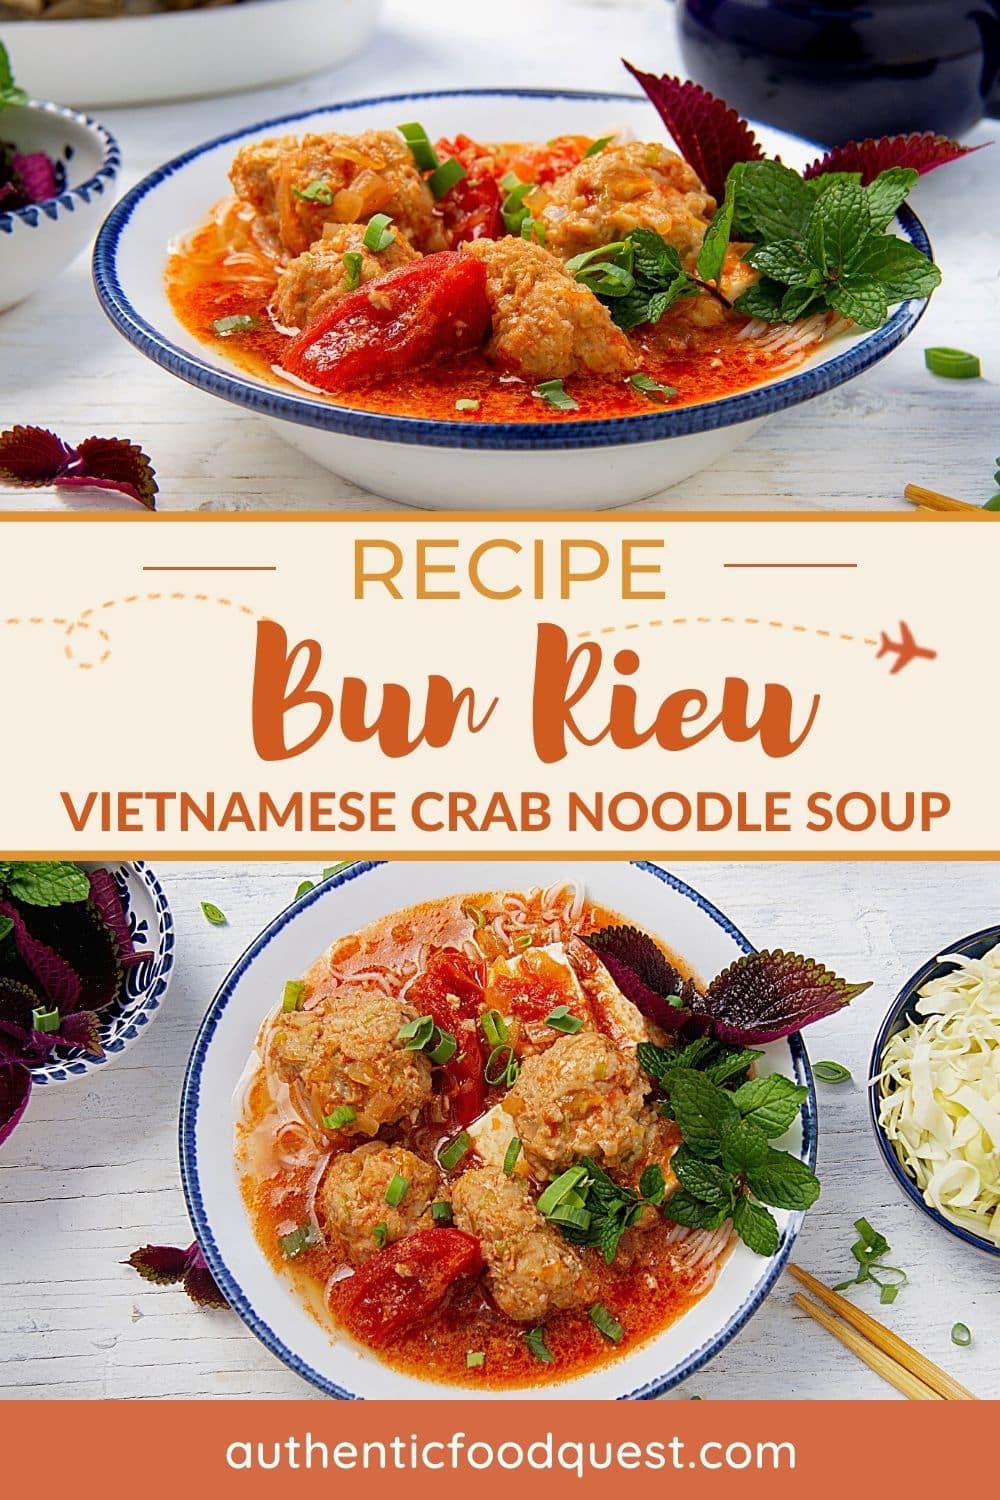 Bun Rieu Recipe: How To Make Vietnamese Crab Noodle Soup